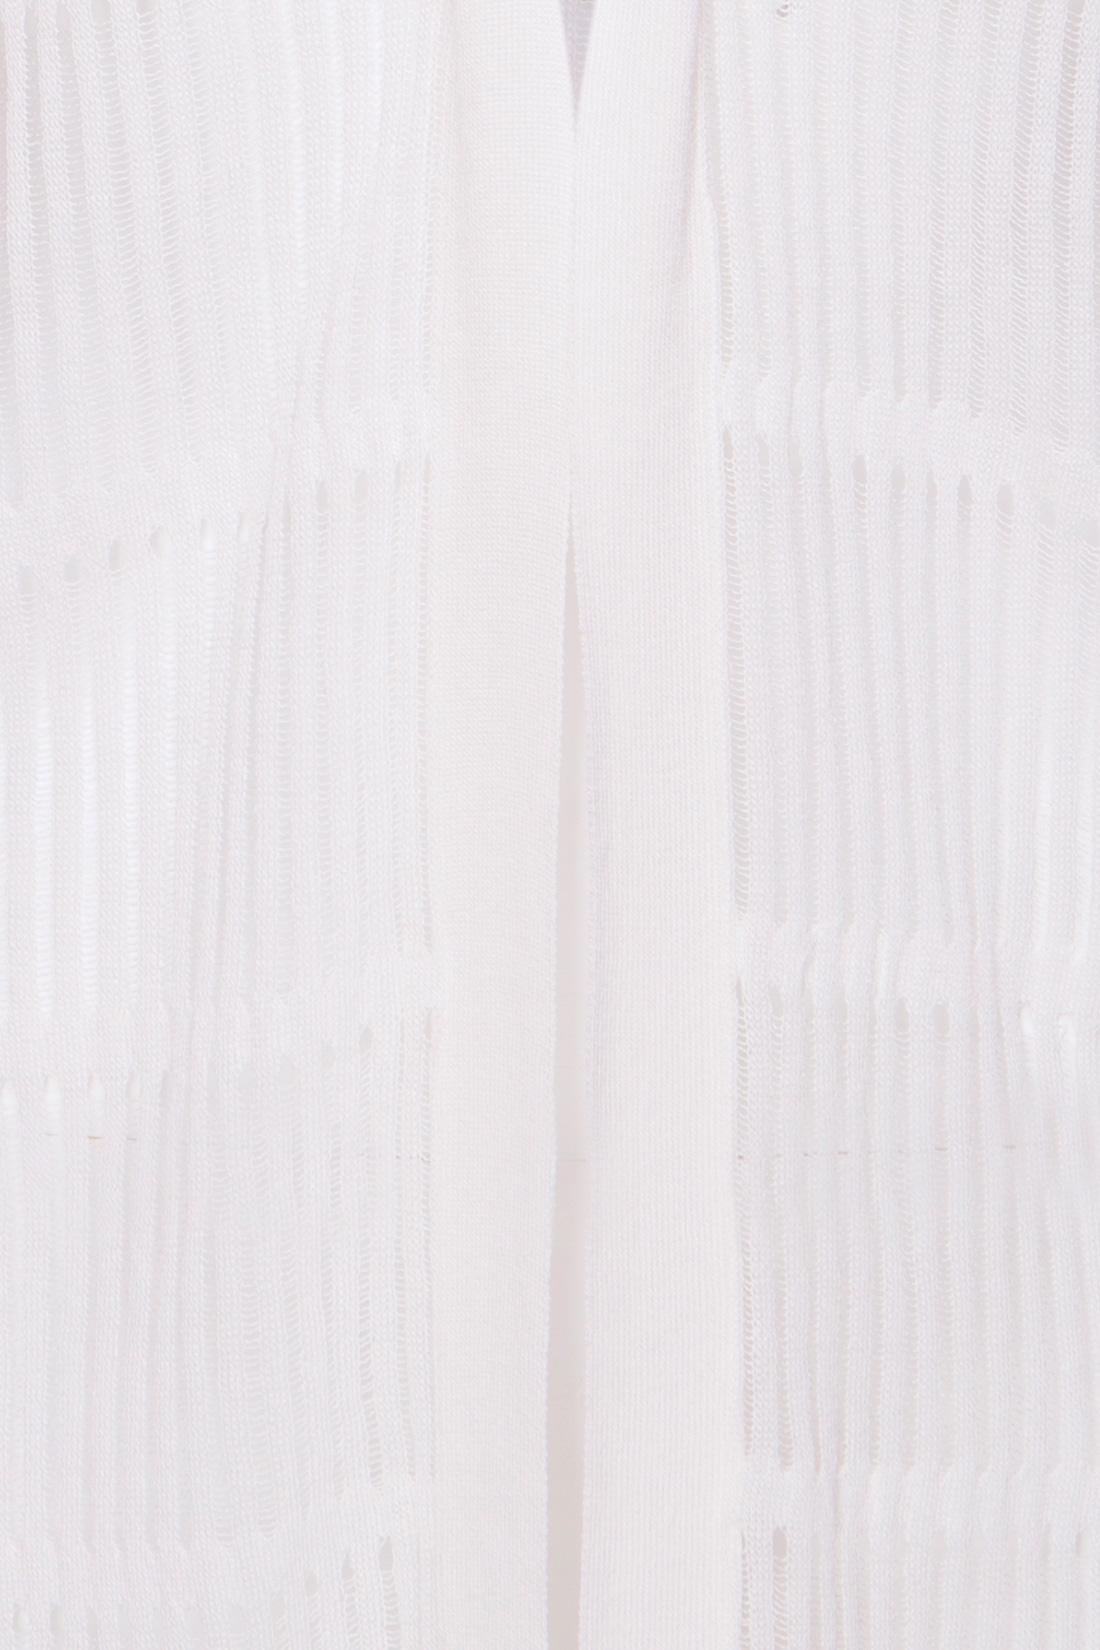 Кардиган с ажурным узором (арт. baon B147011), размер XXL, цвет белый Кардиган с ажурным узором (арт. baon B147011) - фото 3